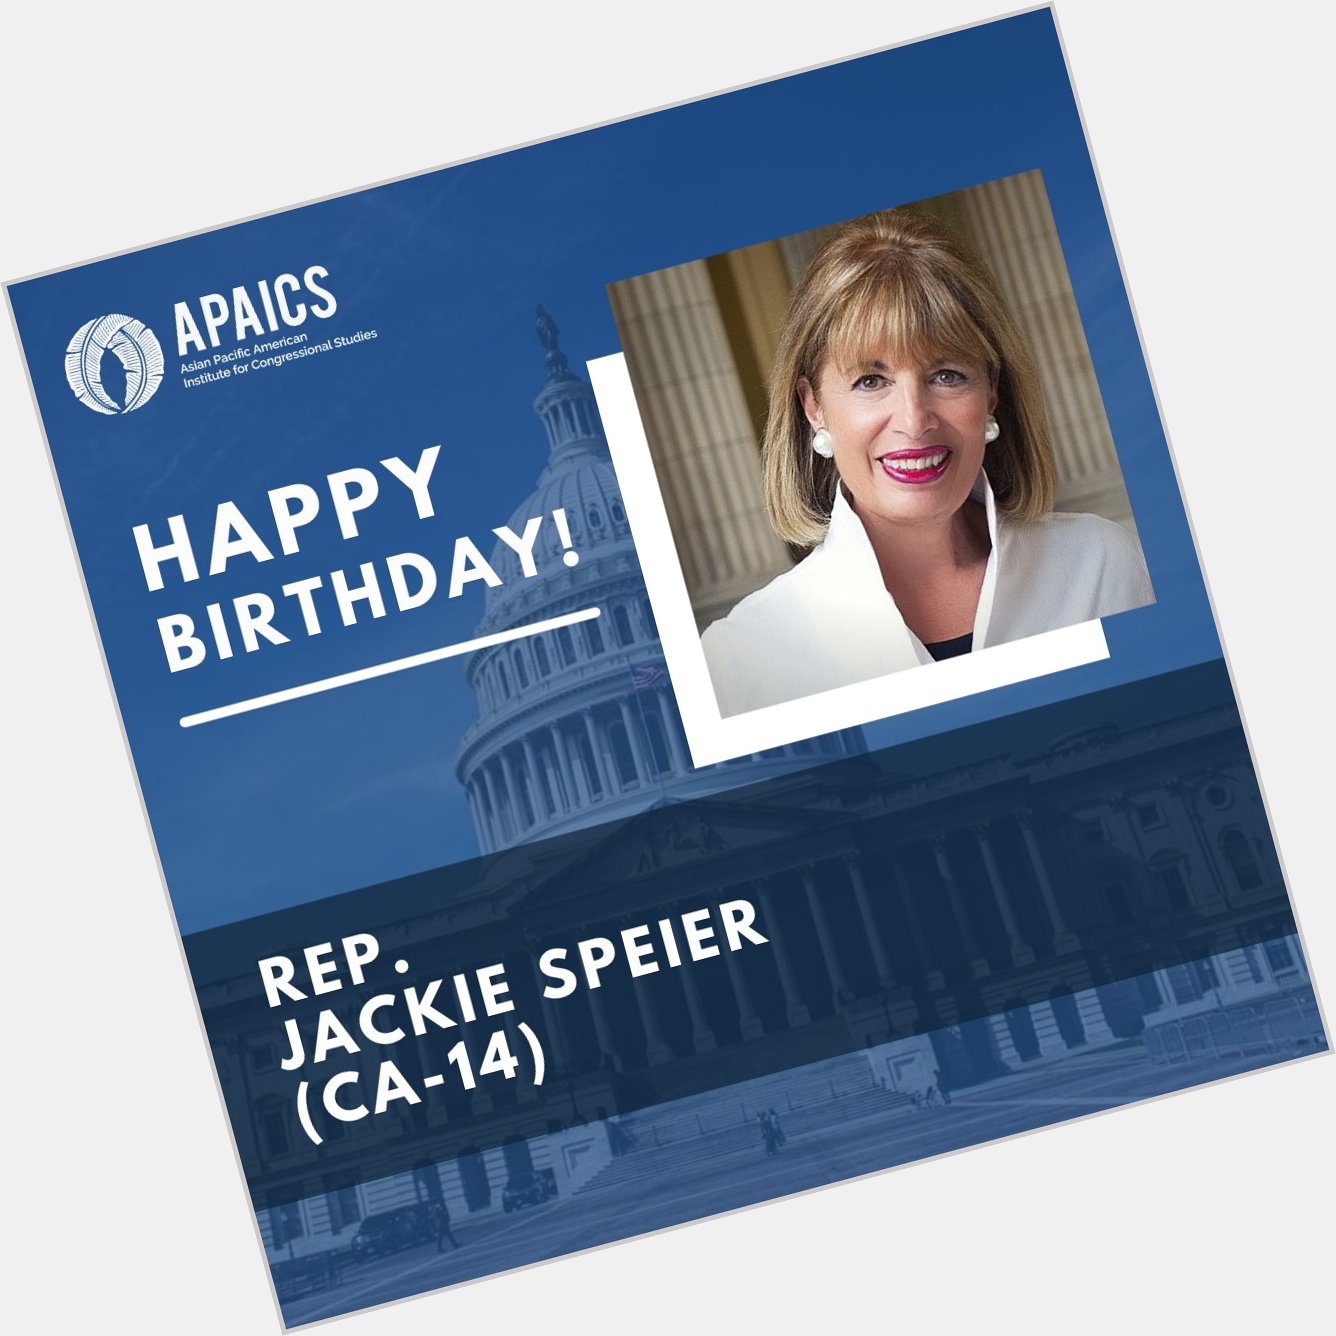 Happy birthday to member Jackie Speier 